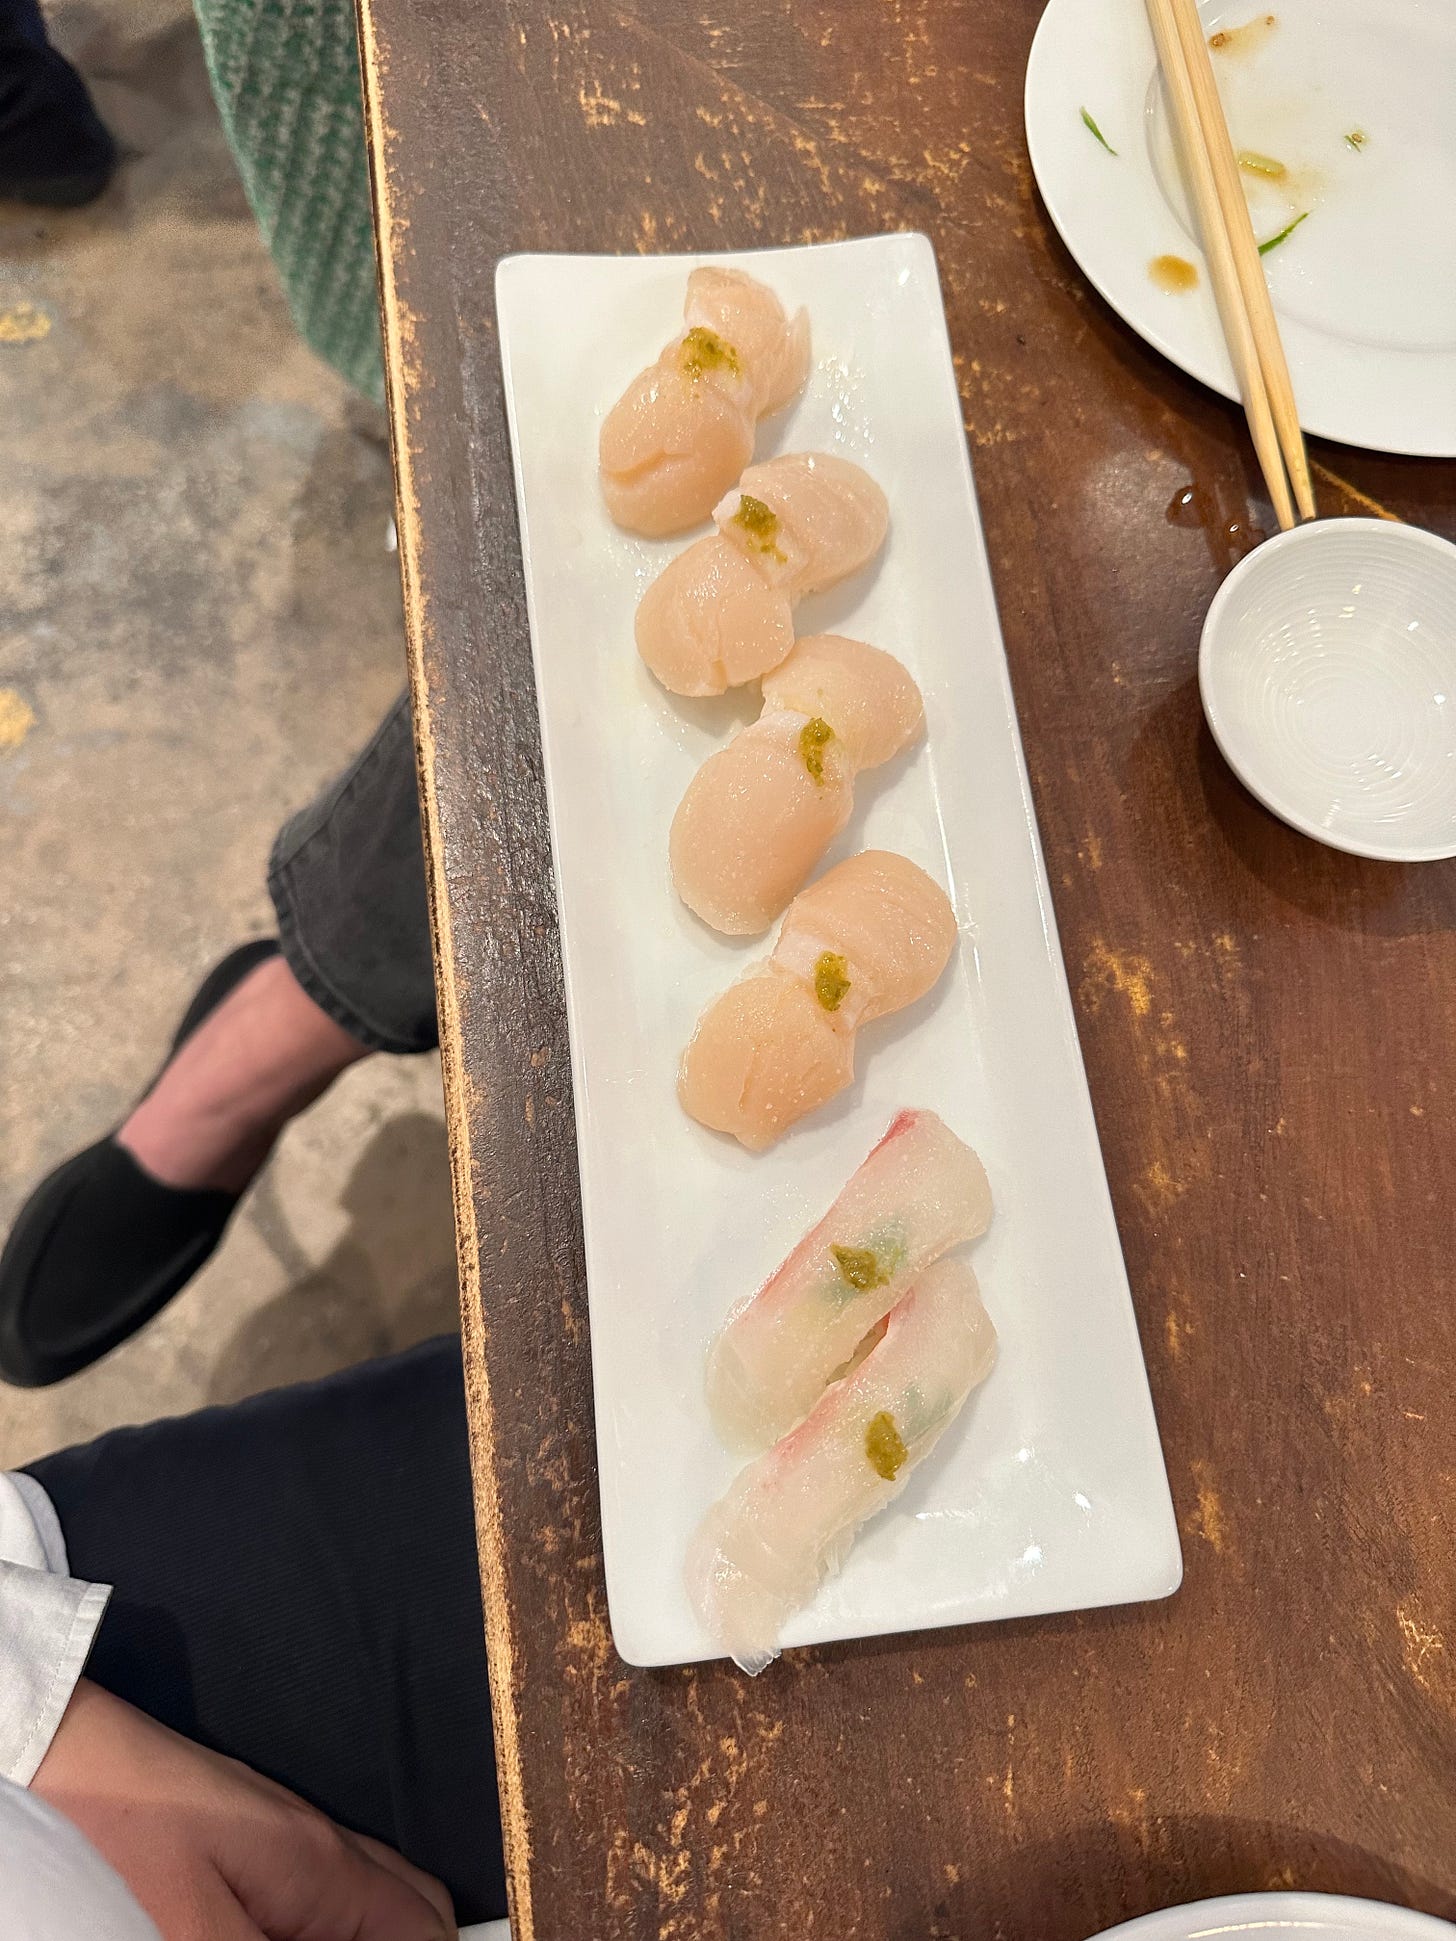 Scallop nigiri at Sushi Fumi